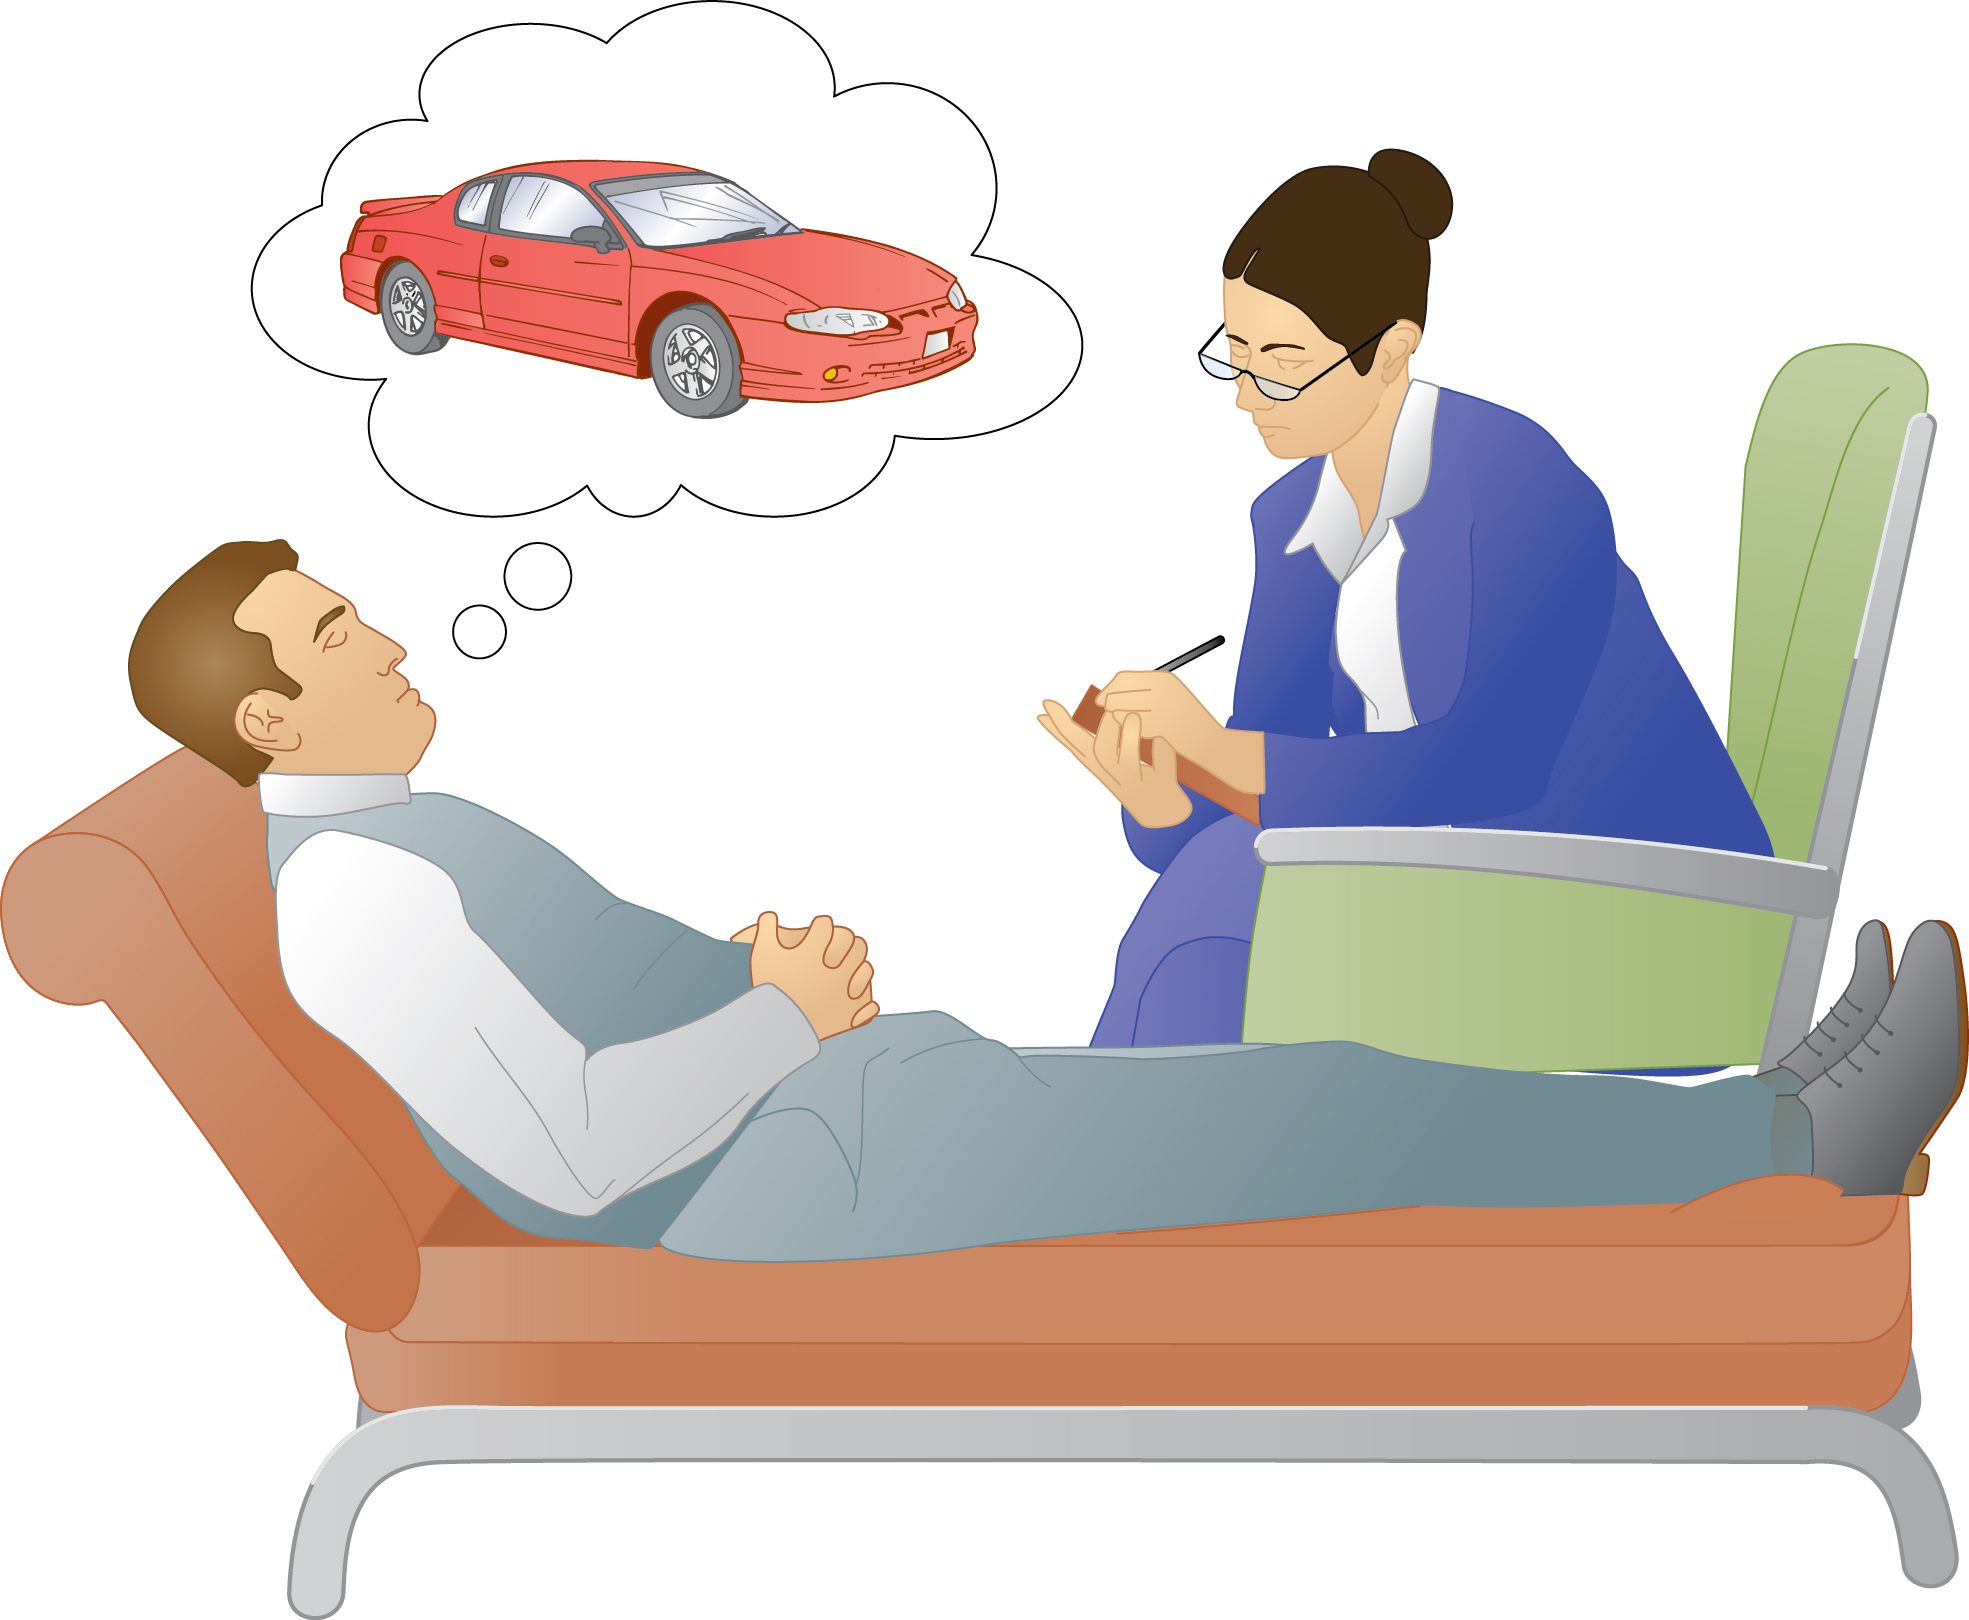 speech bubble over patient’s head; the speech bubble shows a desirable car, fancy watch